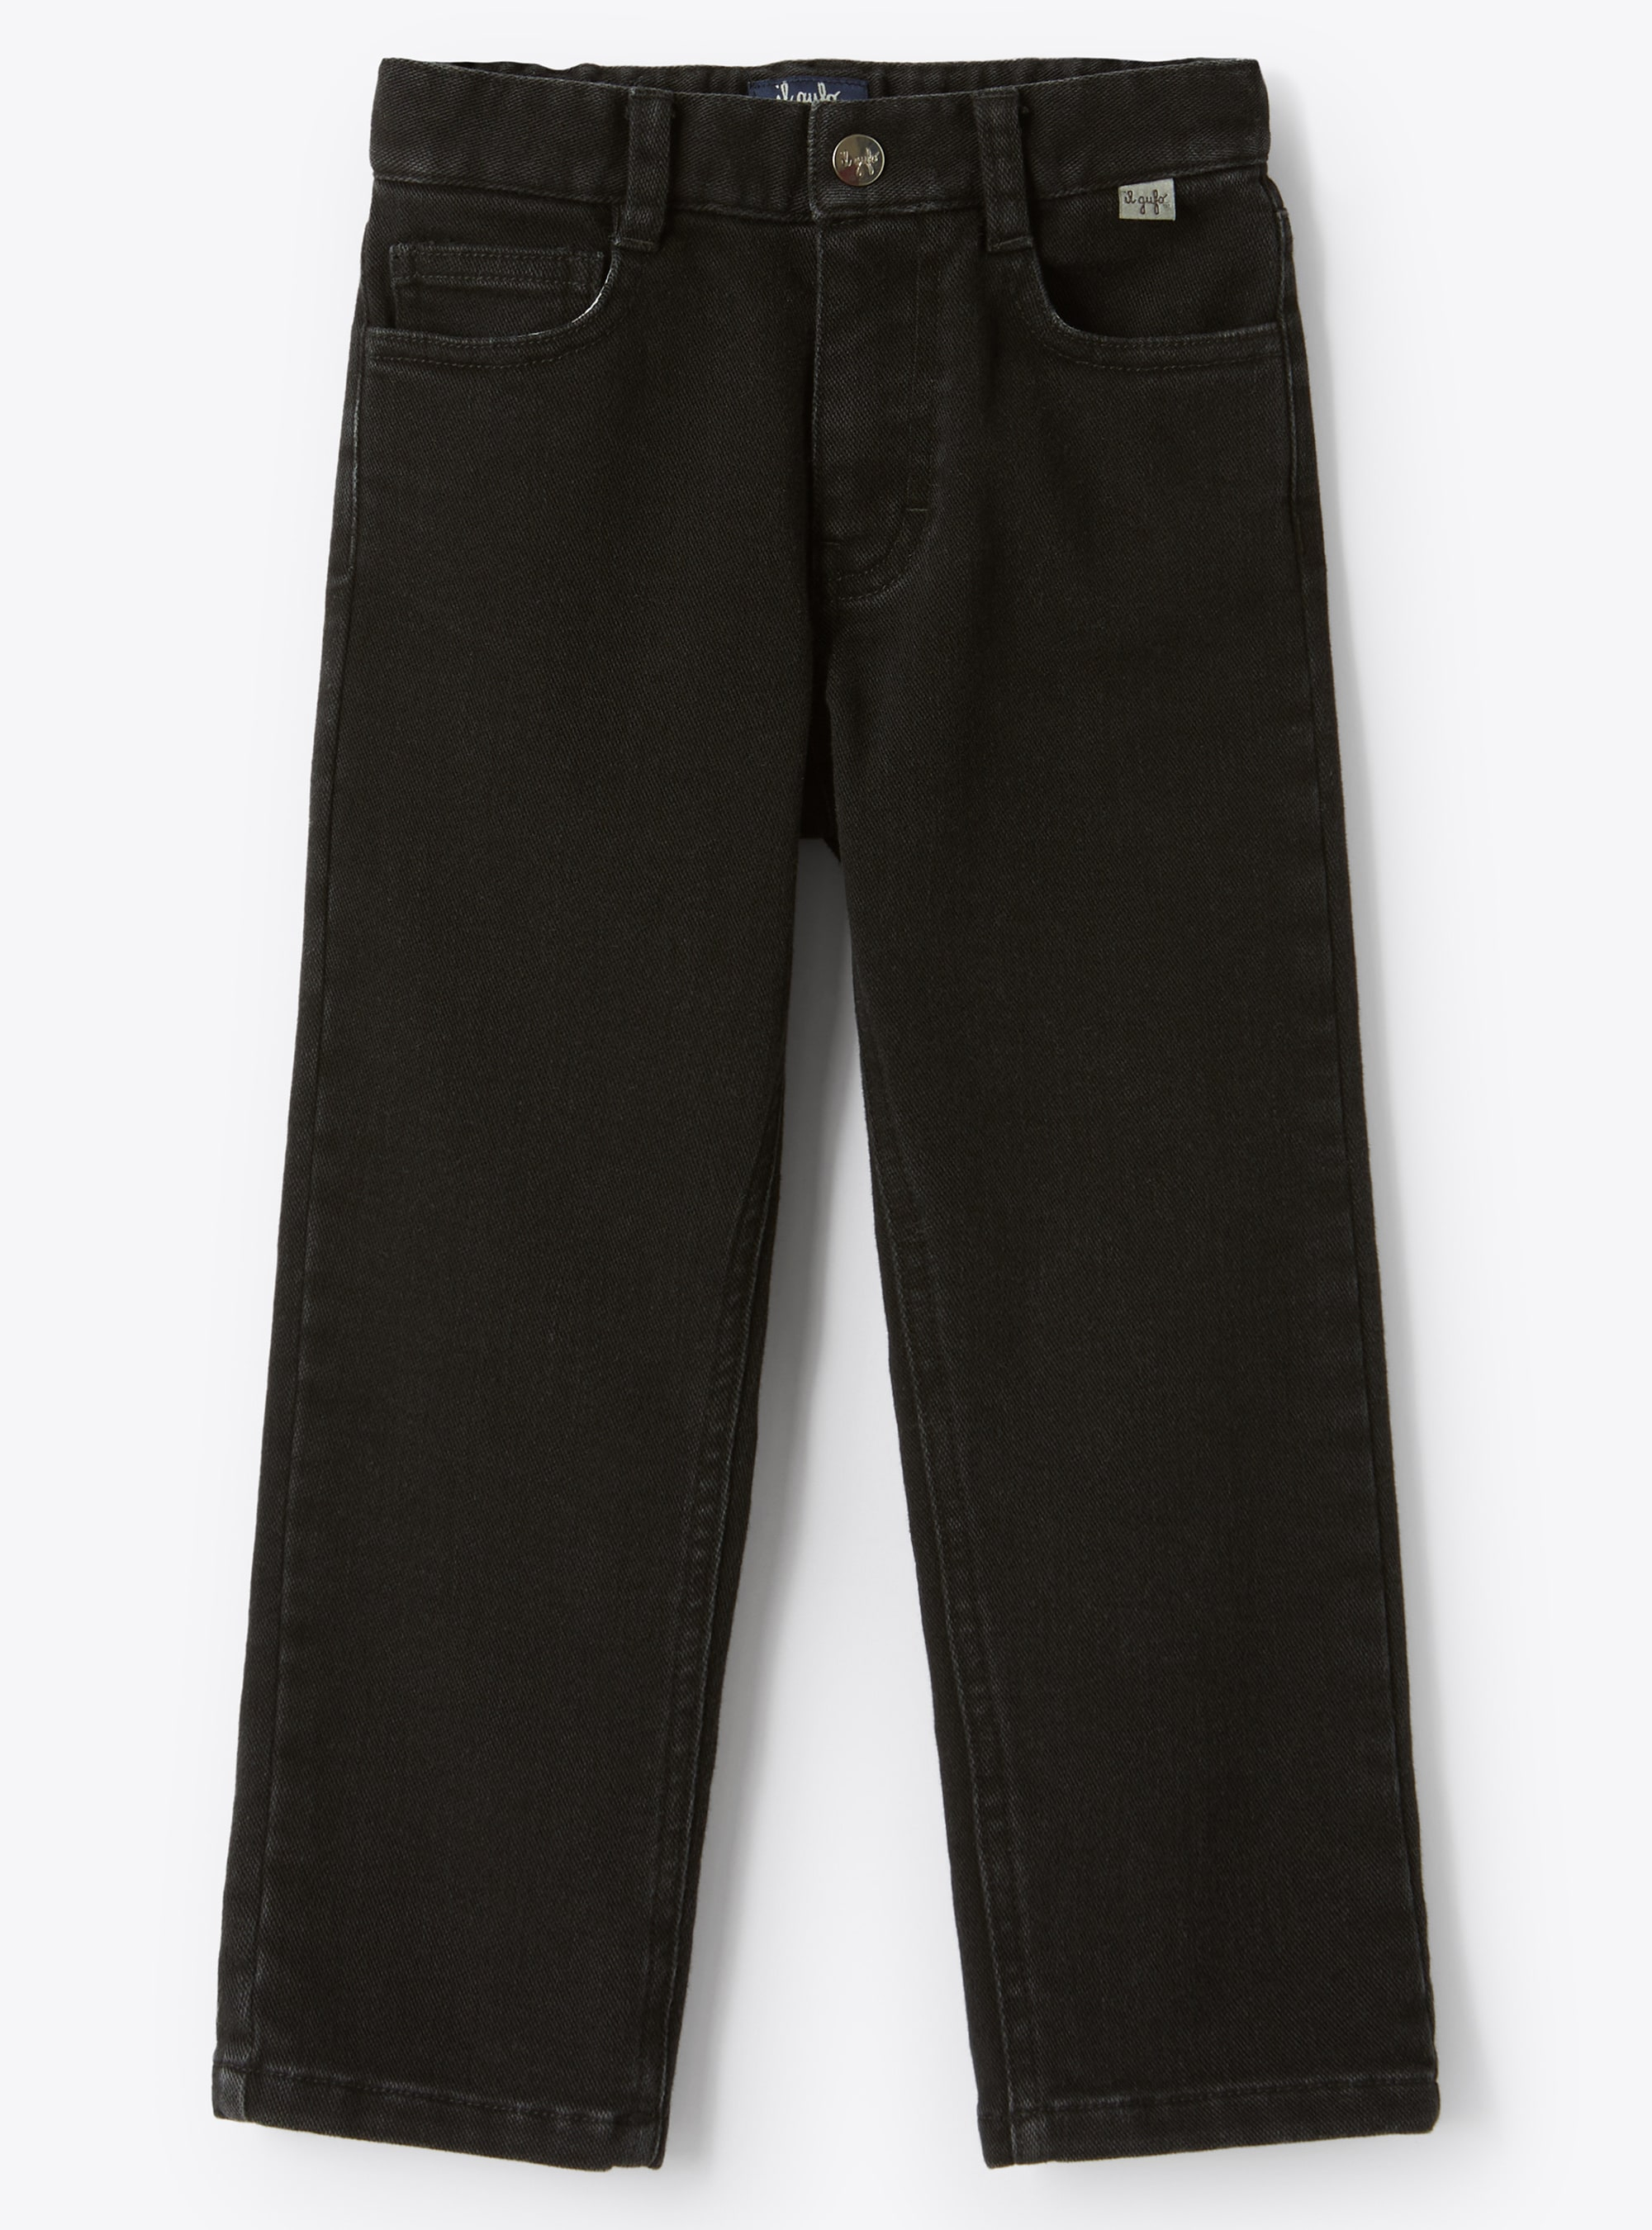 Regular fit 5-pocket jeans in black denim - Trousers - Il Gufo